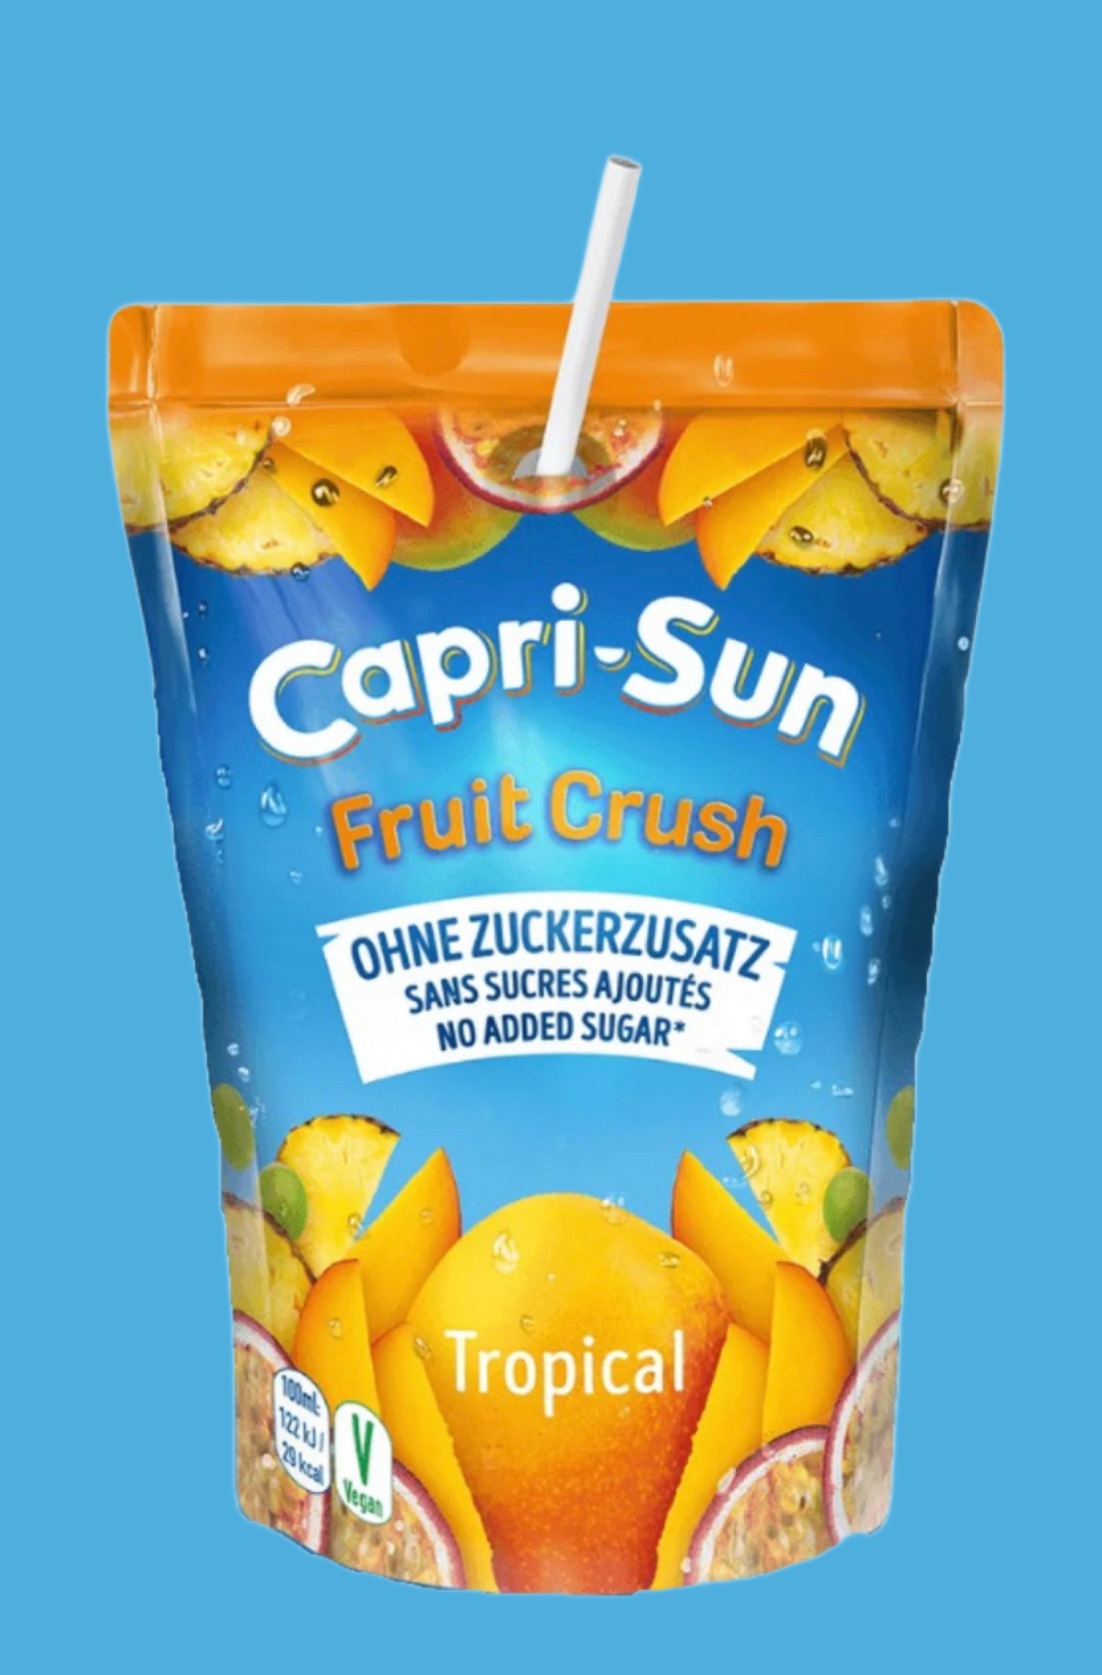 Capri-Sun - Tropical Fruit Crush (Germany)